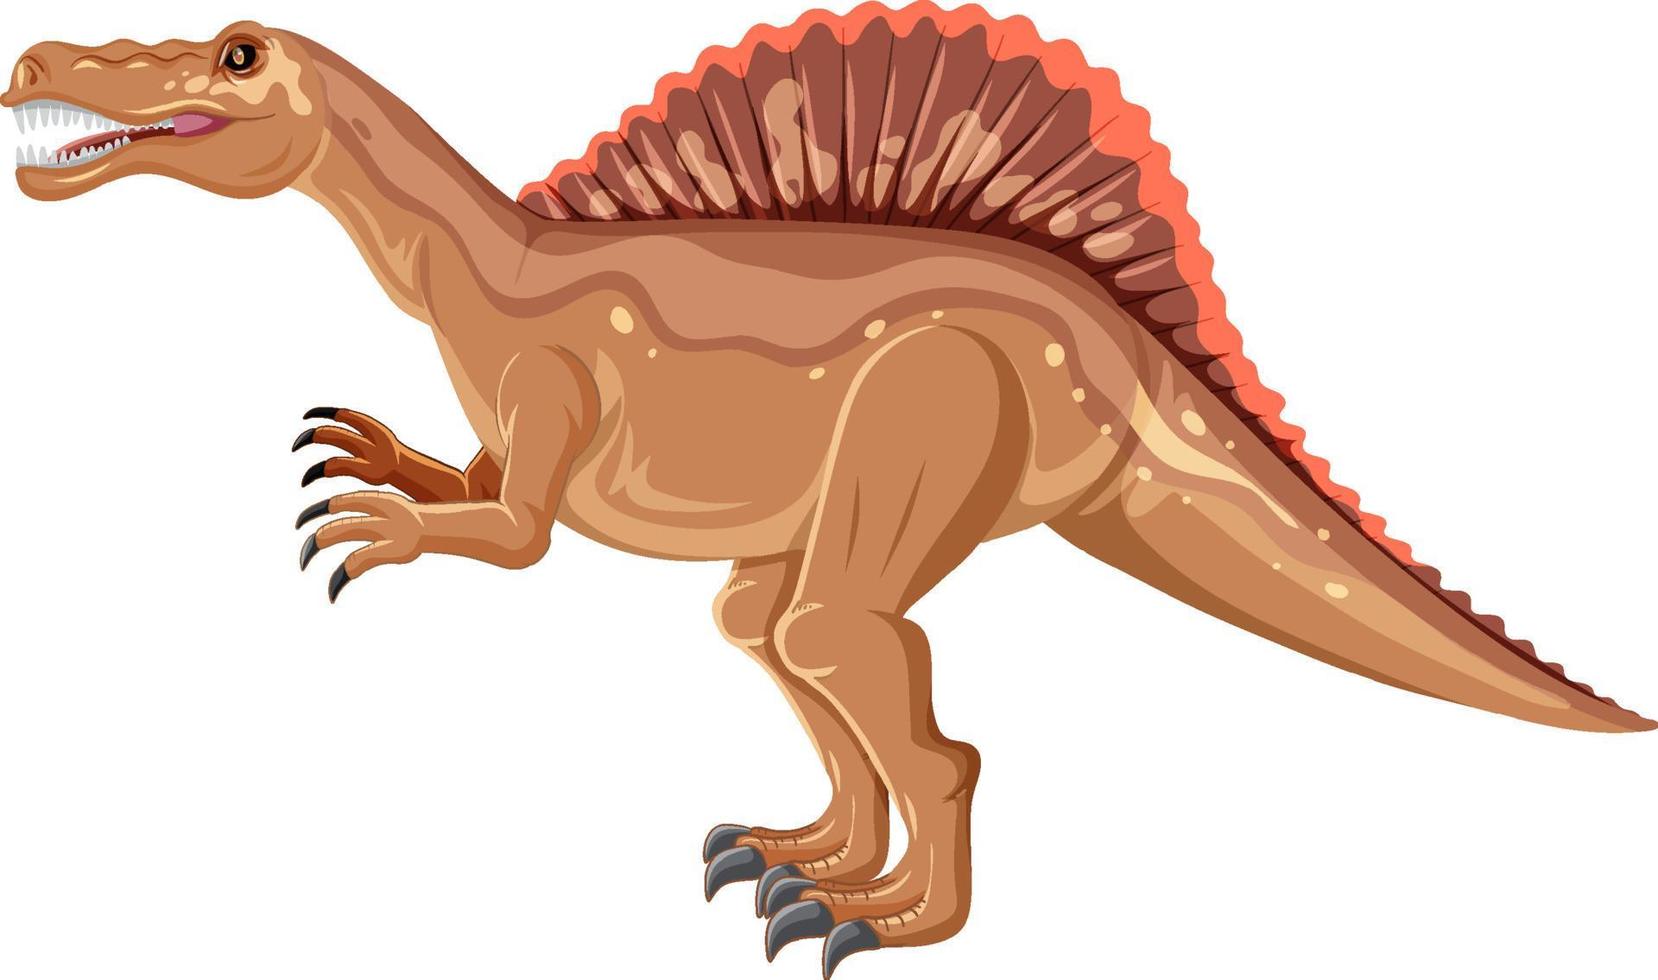 Spinosaurus dinosaur on white background vector